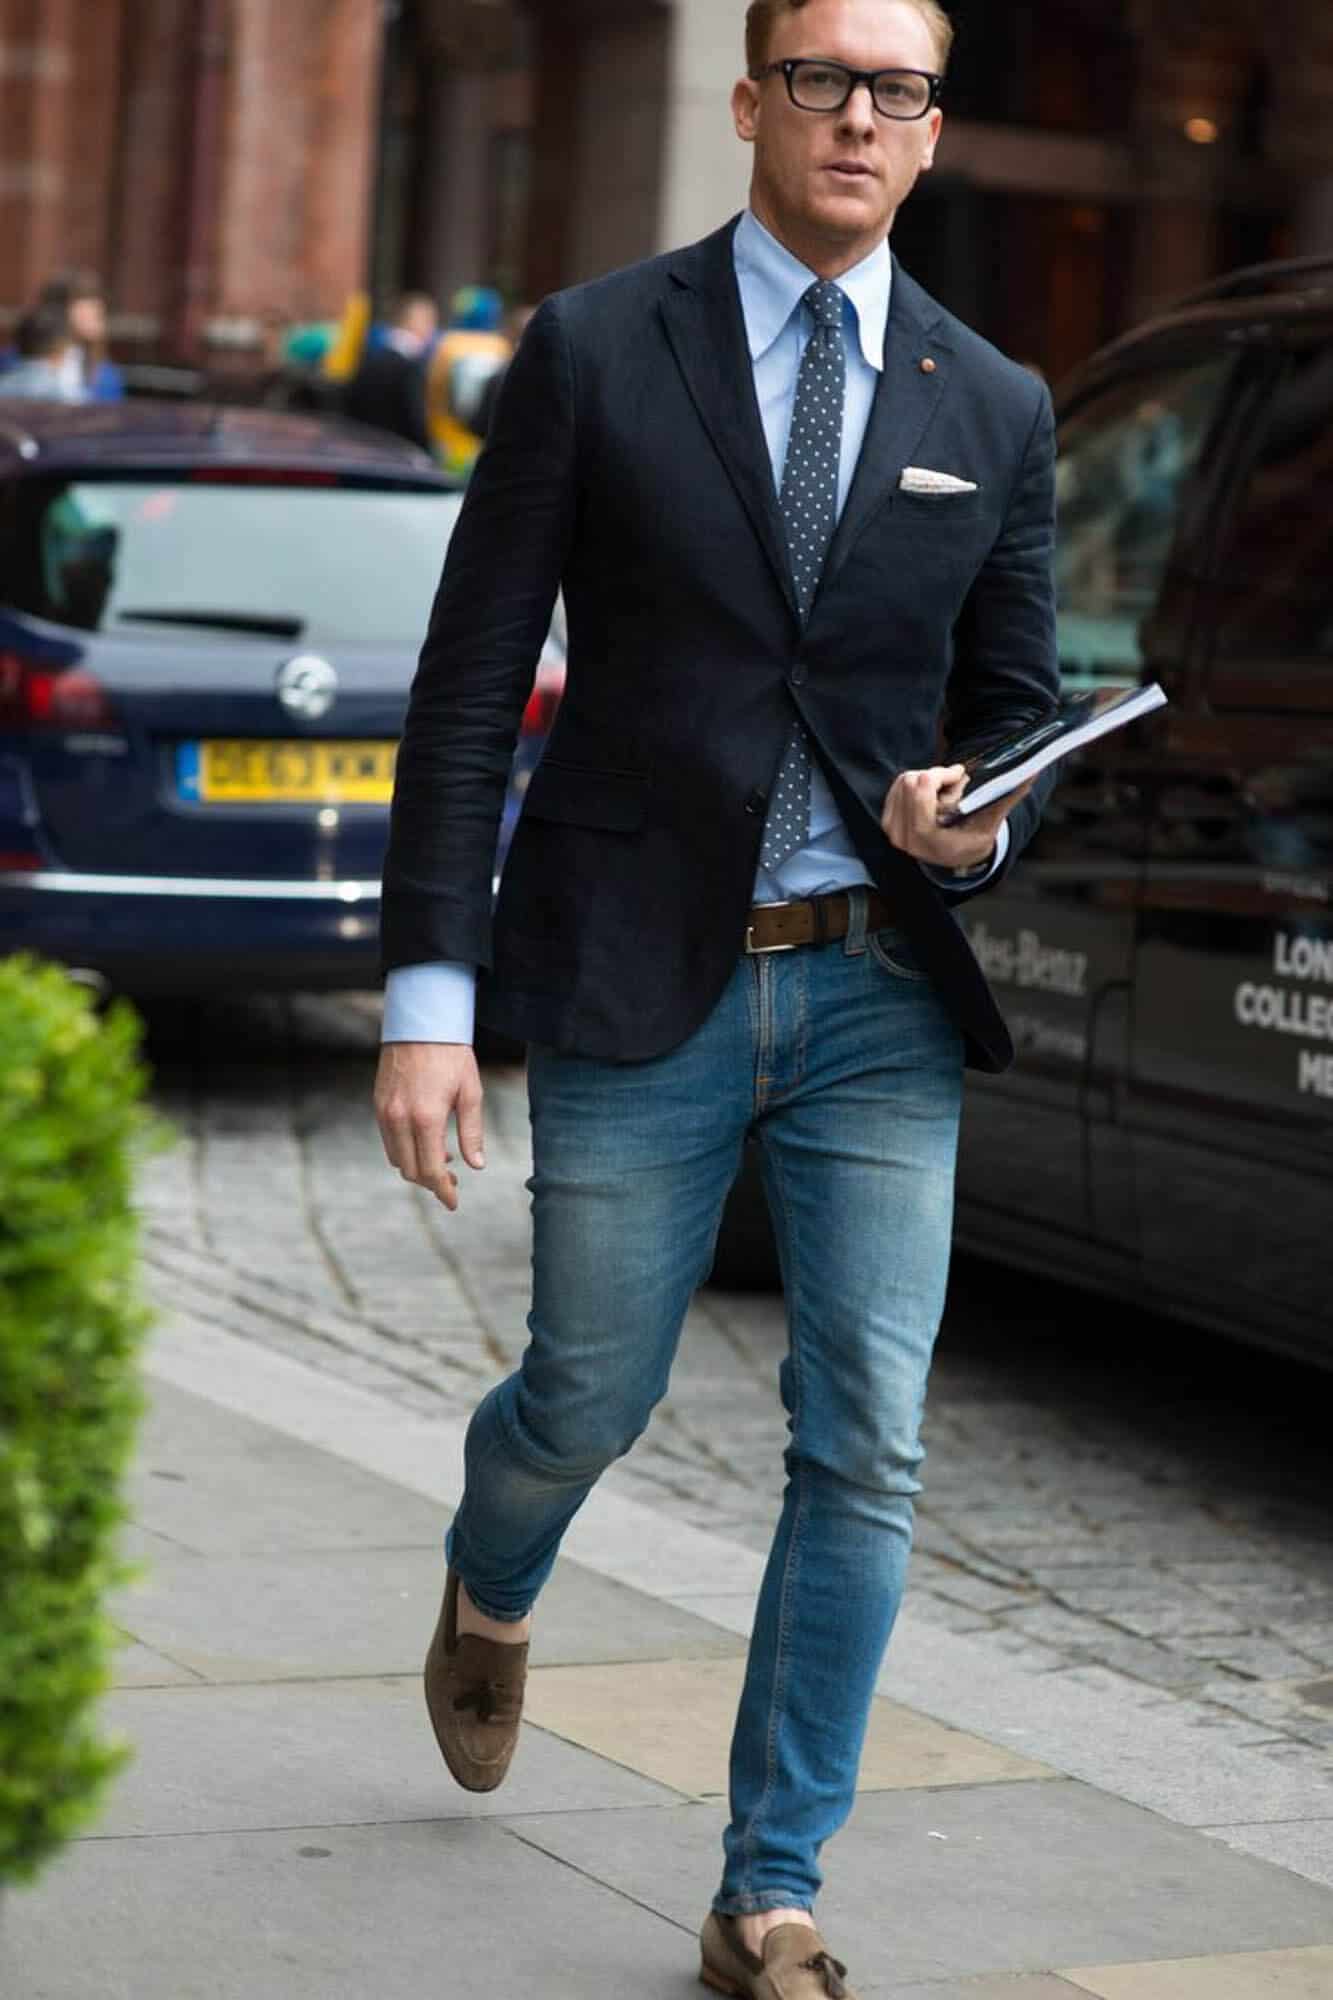 Business Casual Men's Attire & Dress Code Explained — Gentleman's ...